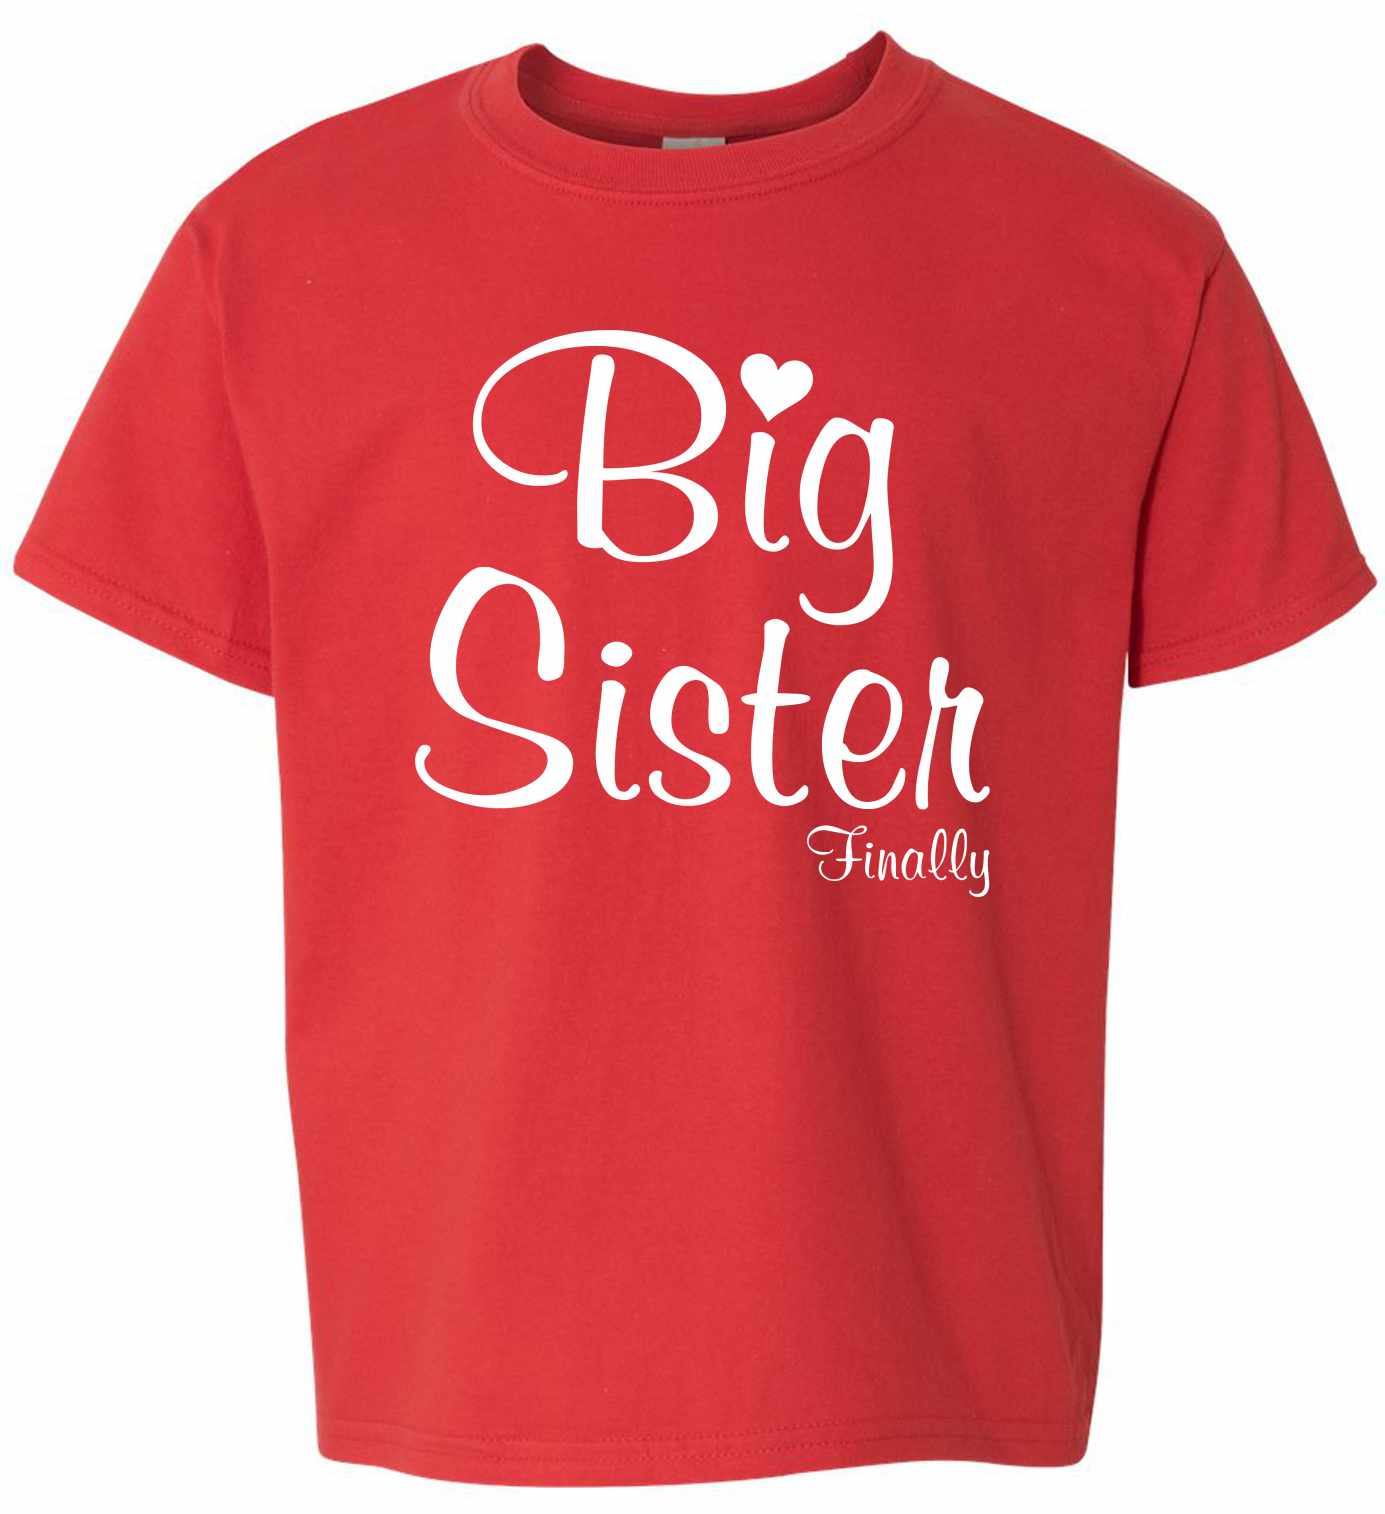 Big Sister Finally on Kids T-Shirt